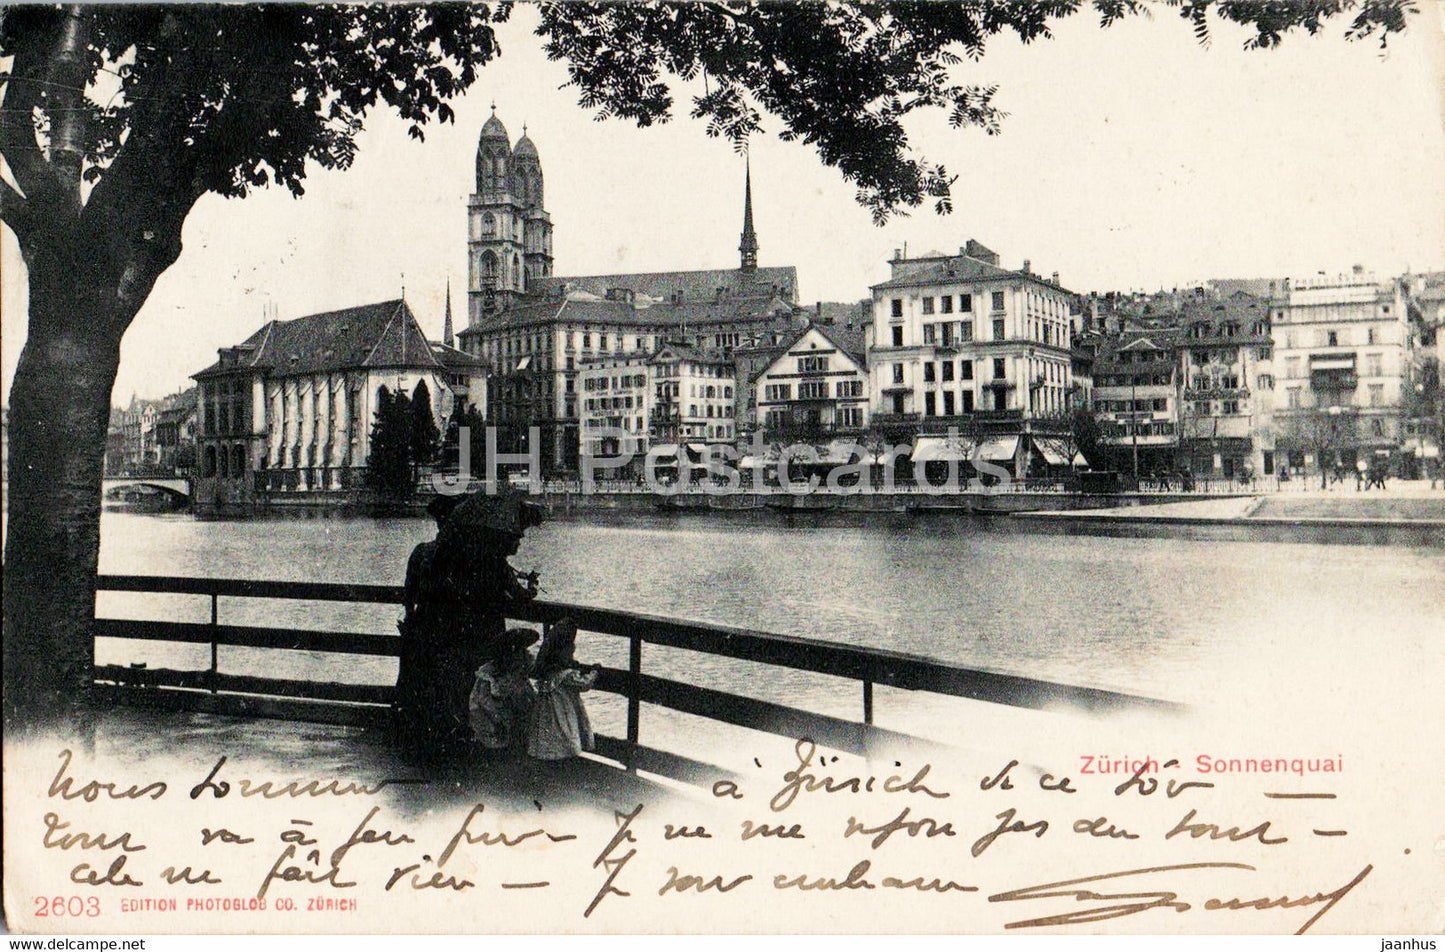 Zurich - Sonnenquai - 2603 - old postcard - 1903 - Switzerland - used - JH Postcards